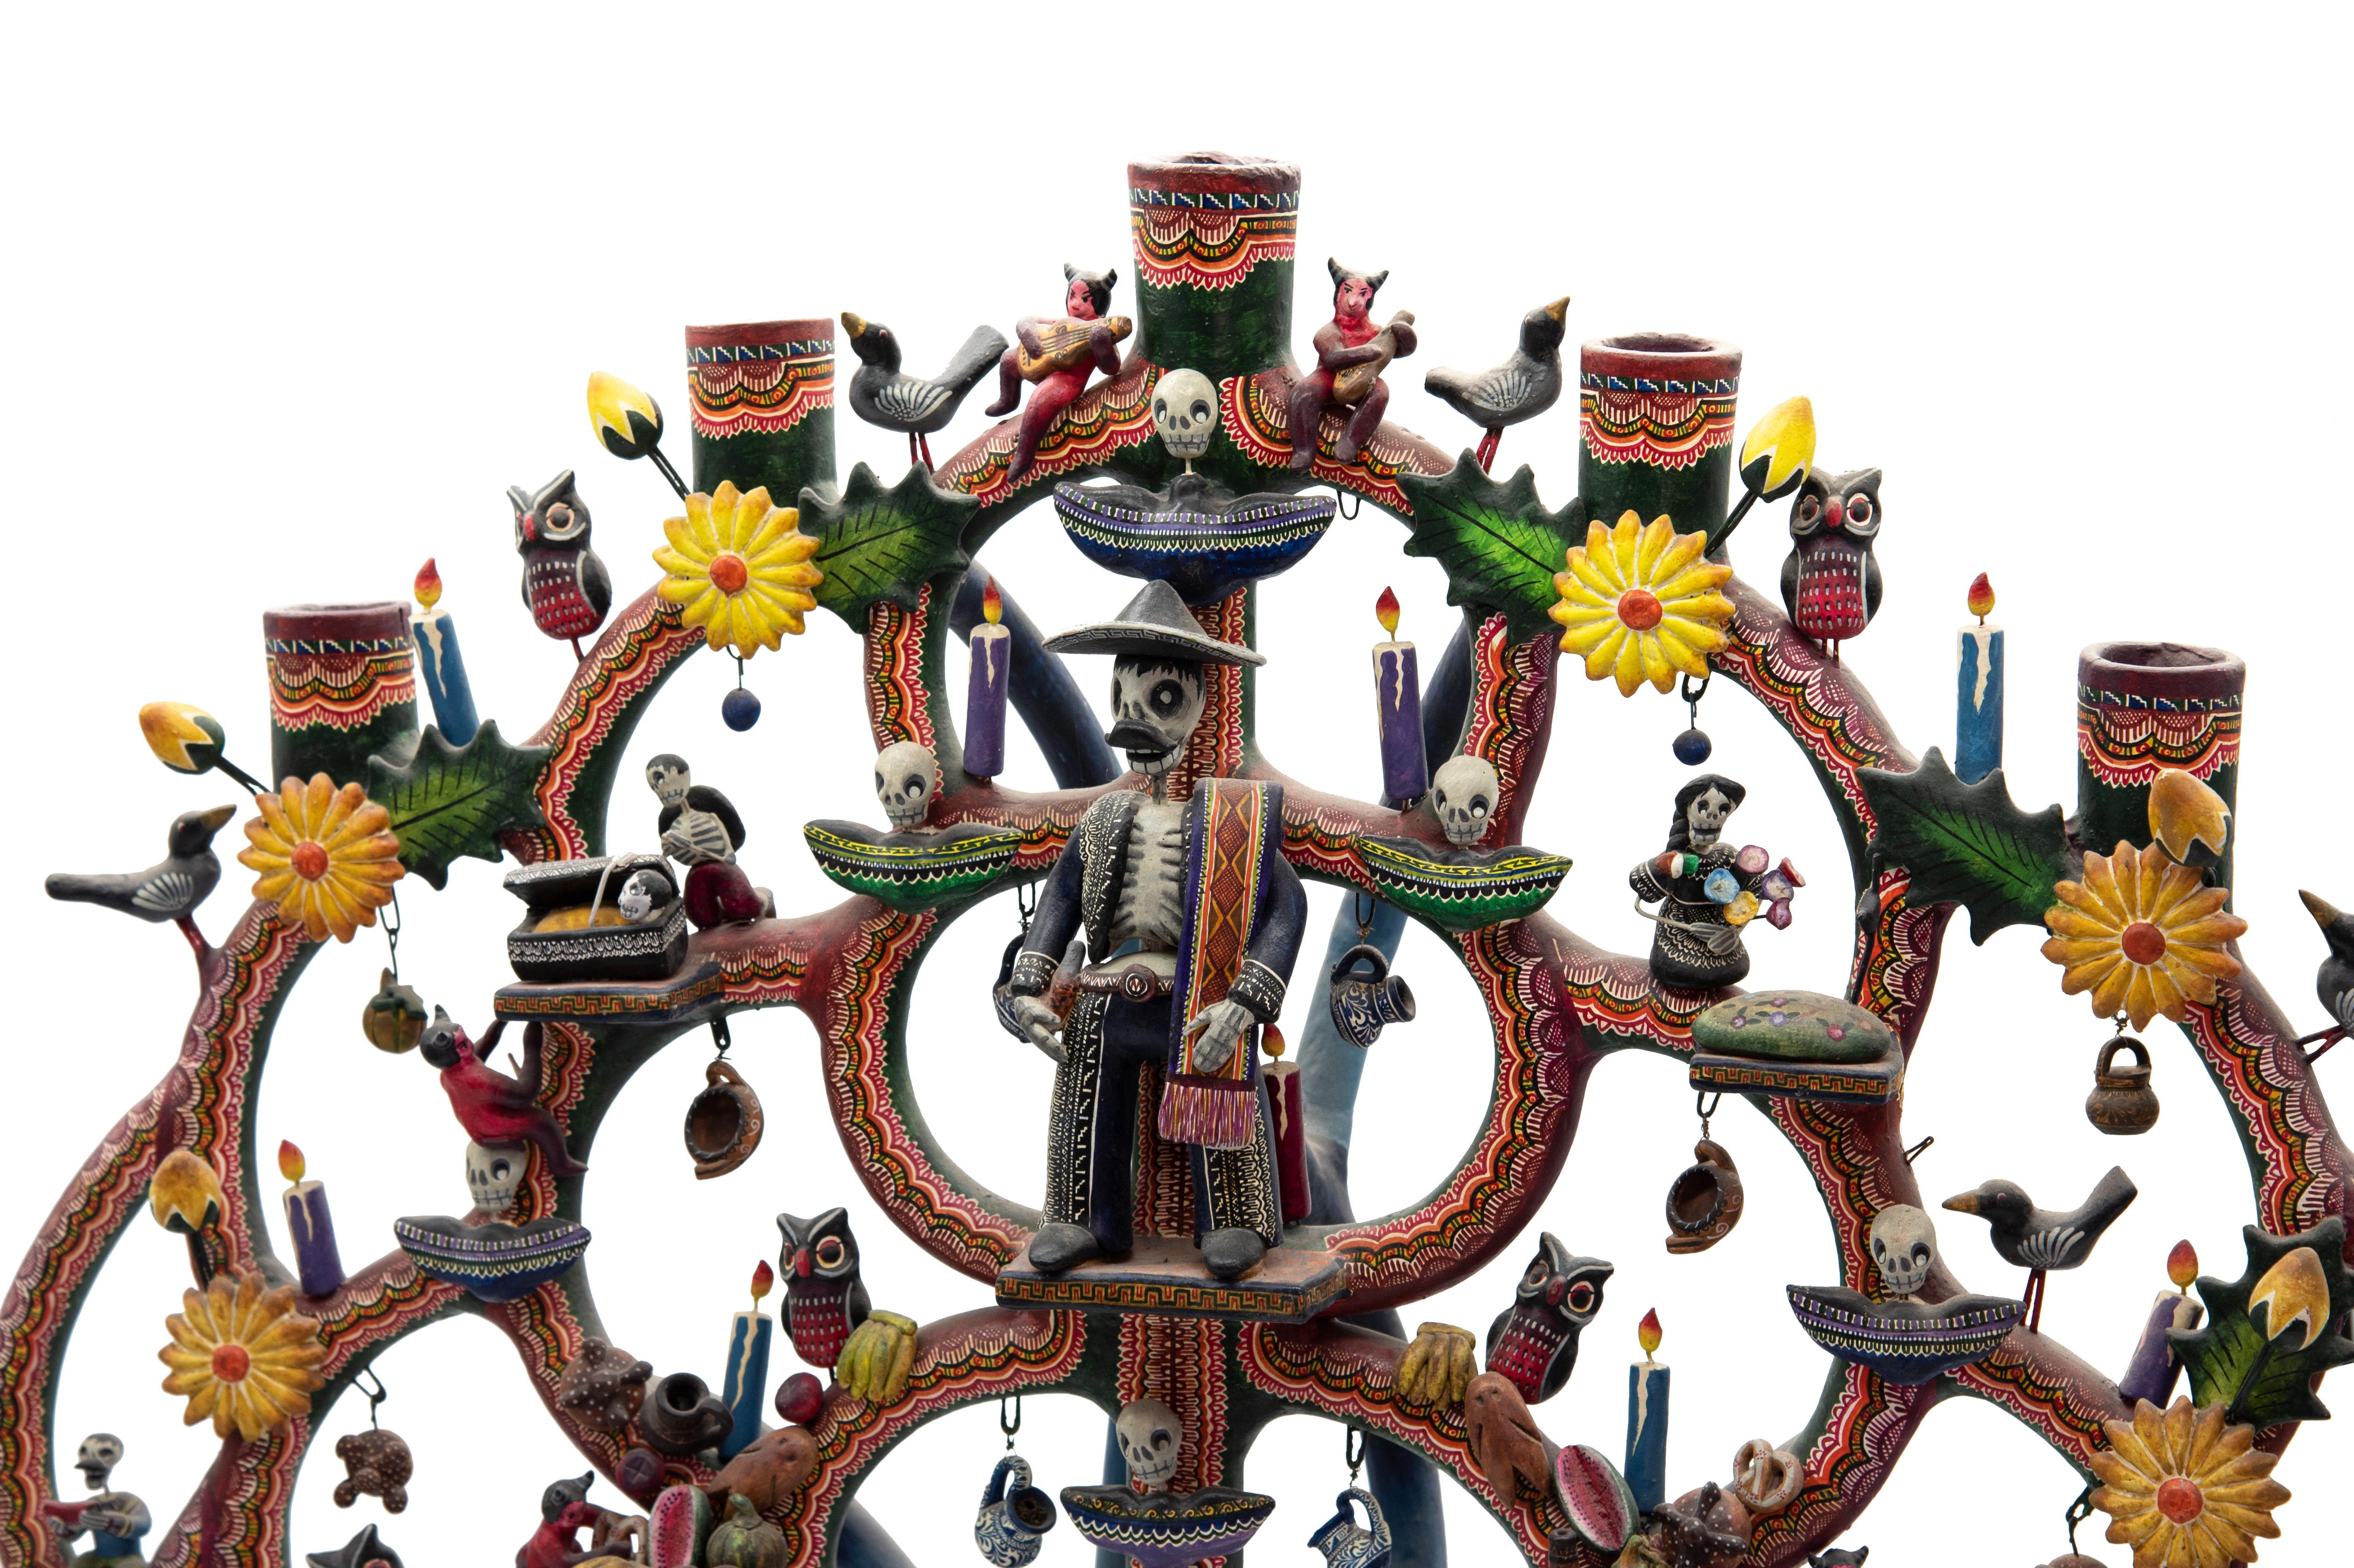 Hand-Painted Mexican Antique Arbol de la Vida Folk Art Candelabra Ceramic Day of the Dead  For Sale